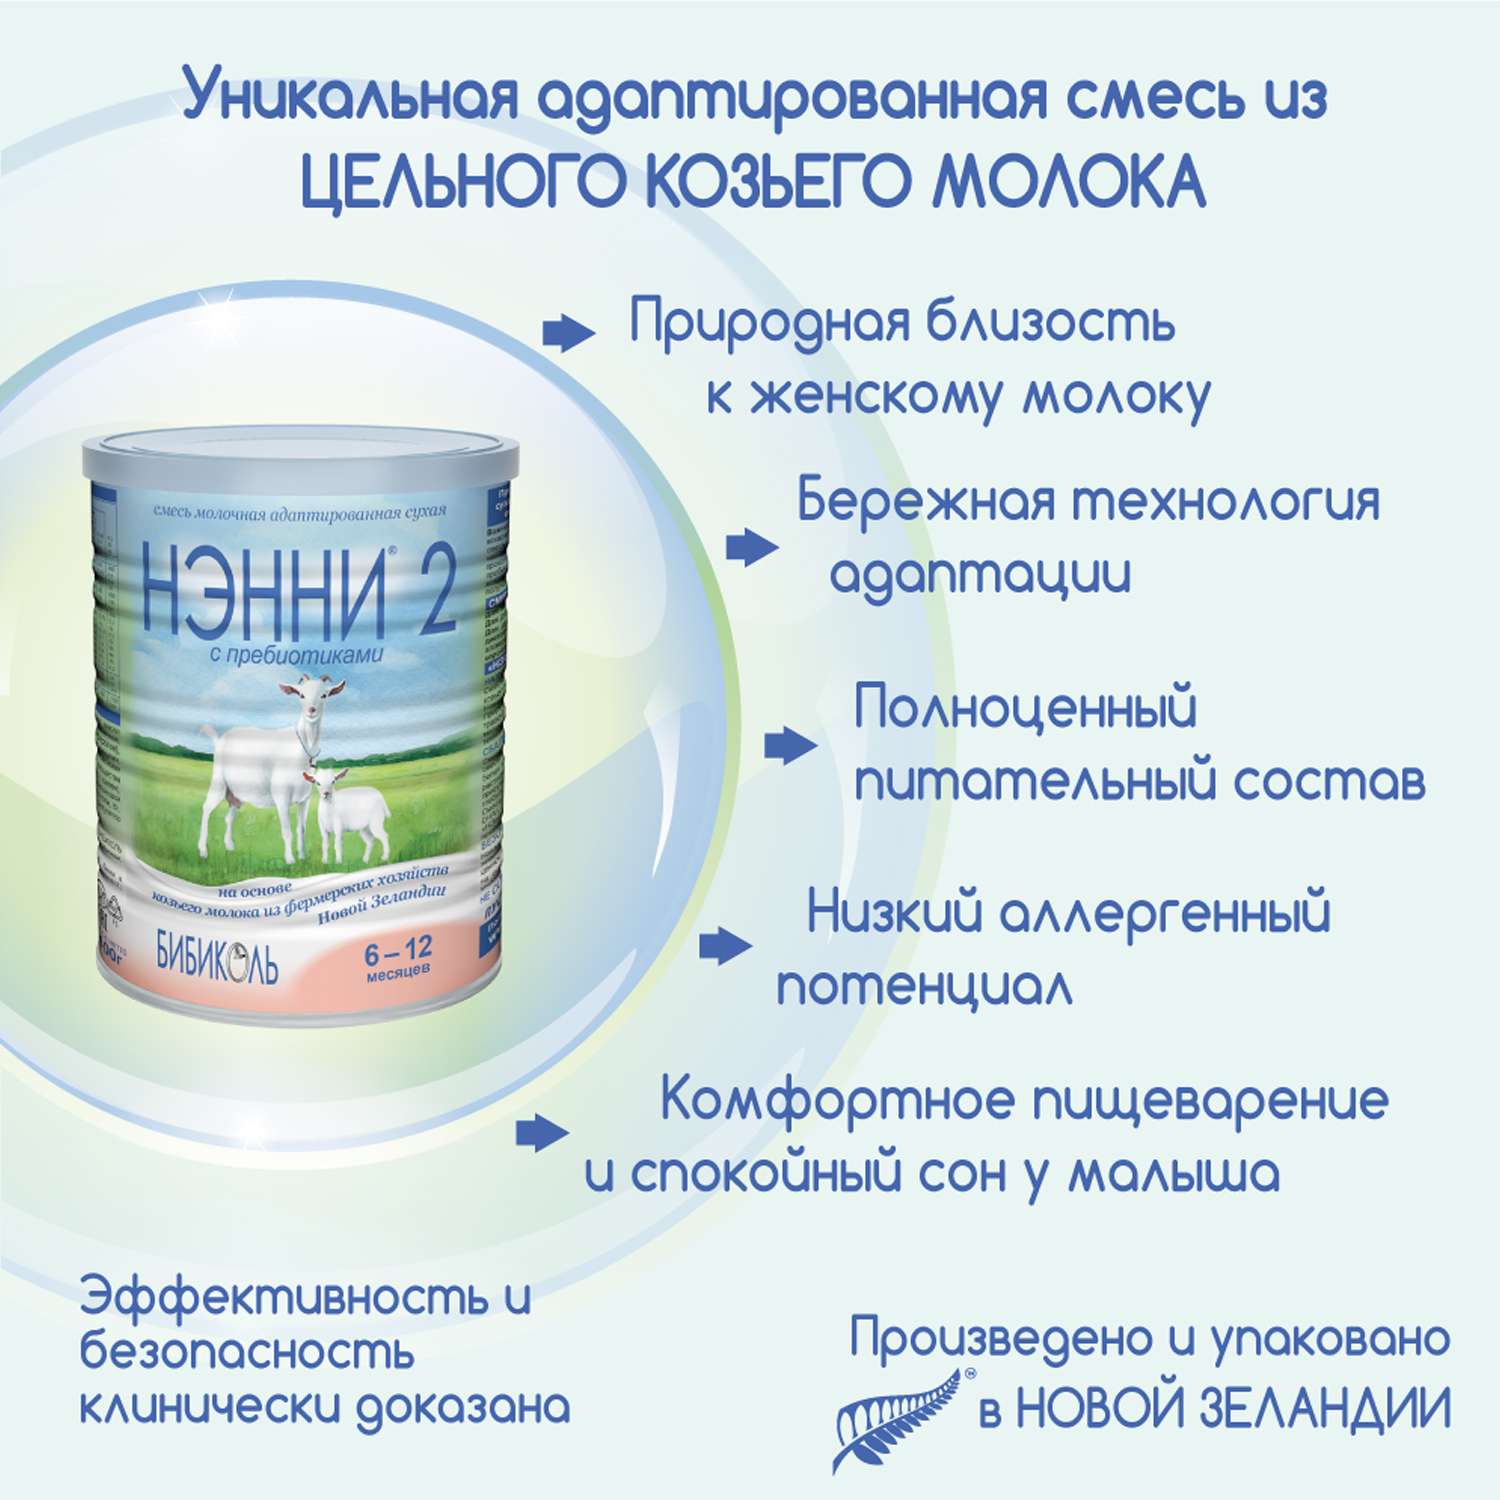 Молочная смесь Бибиколь 2 с пребиотиками на основе козьего молока 400 г с 6-12 мес - фото 3